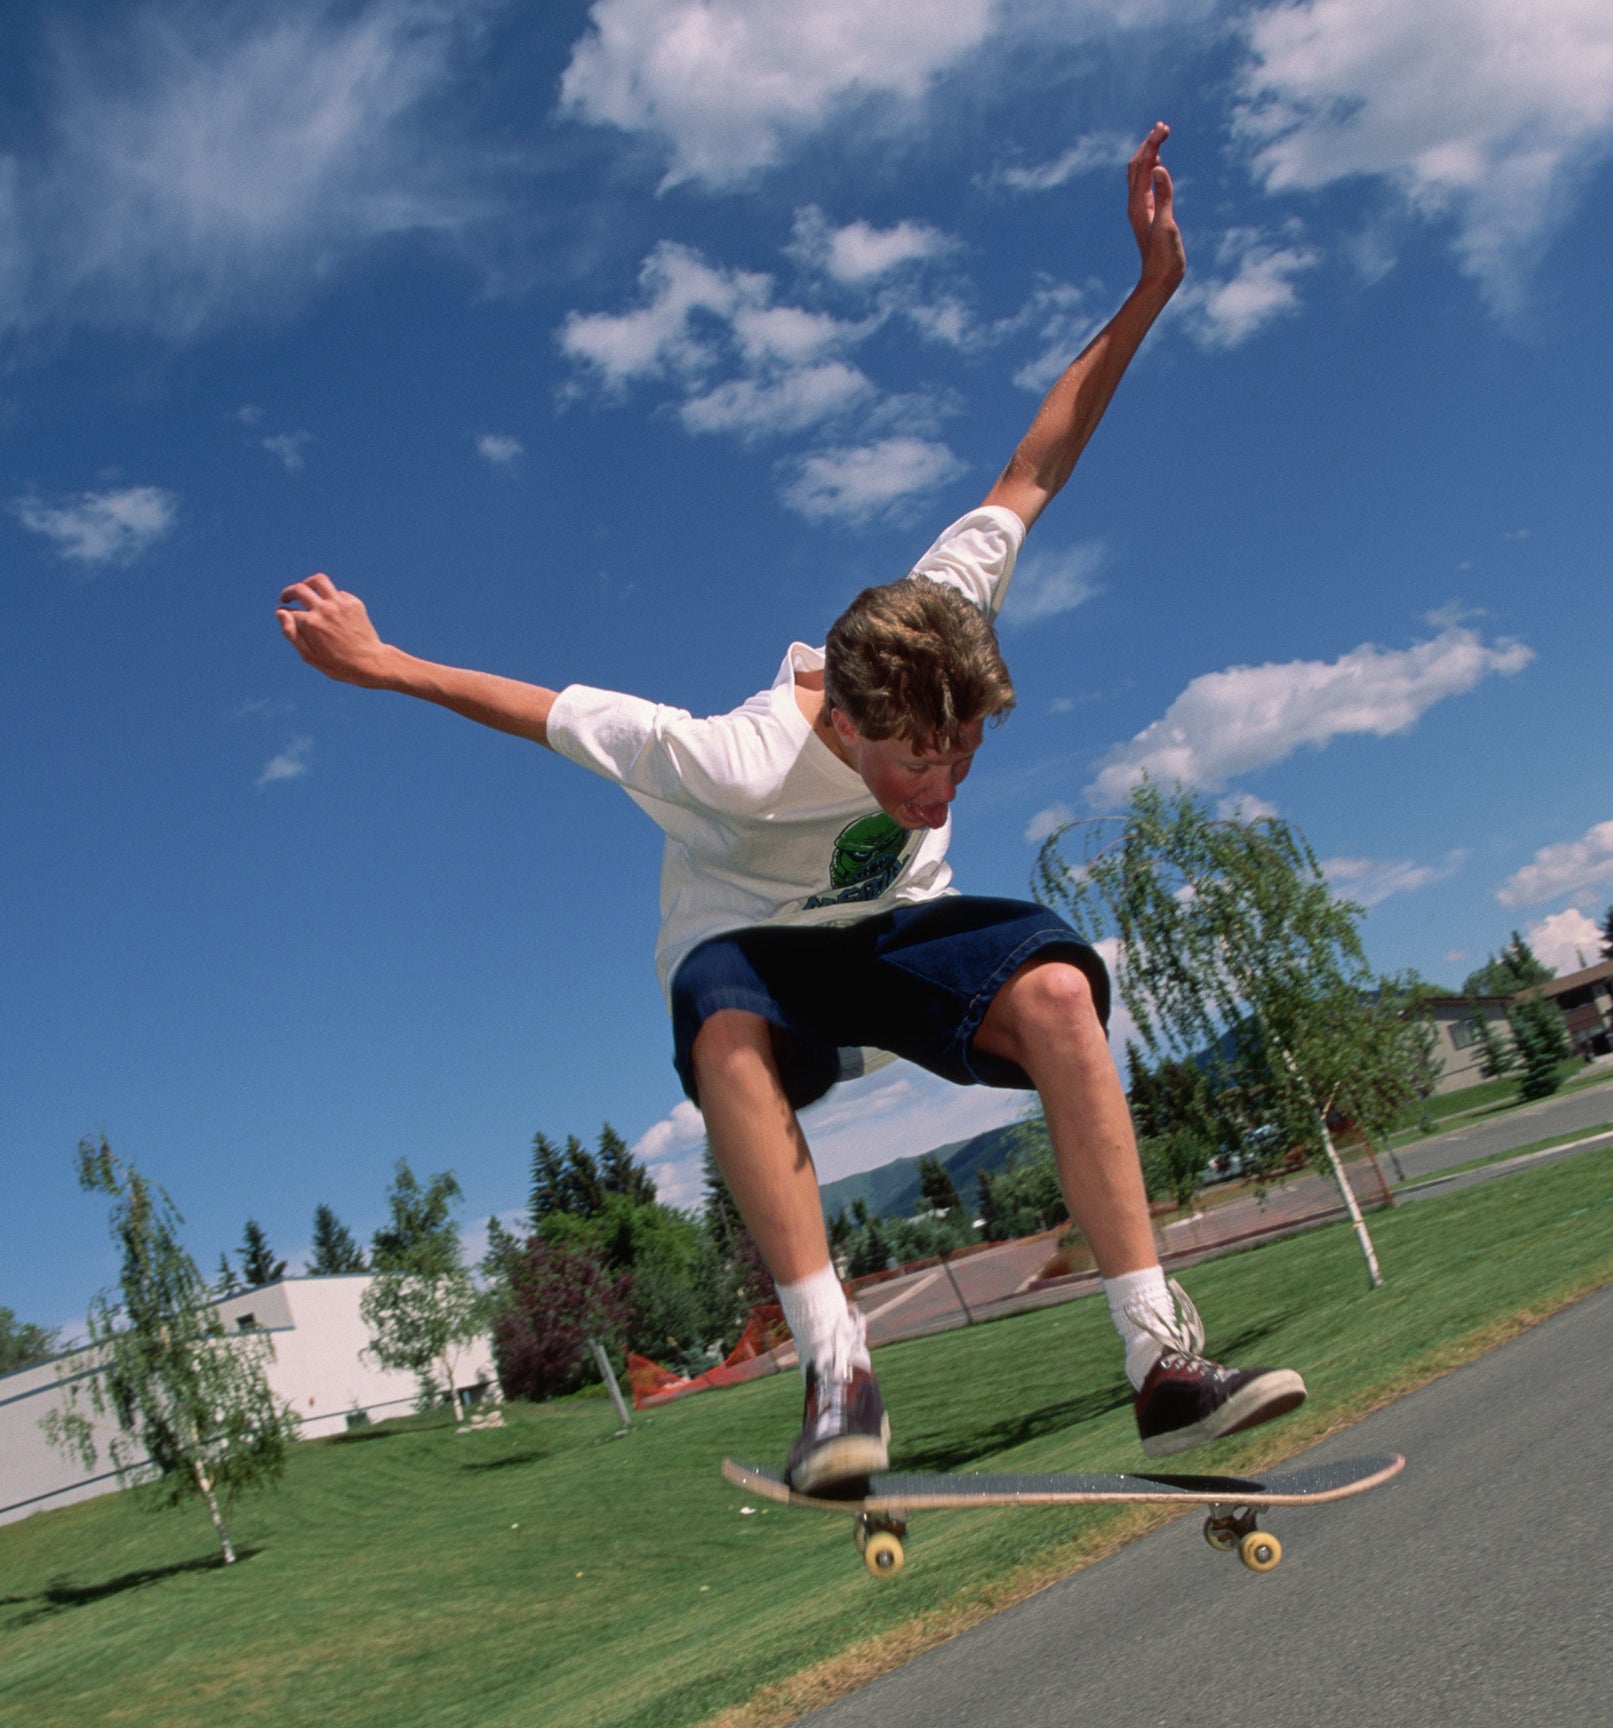 A man skateboarding